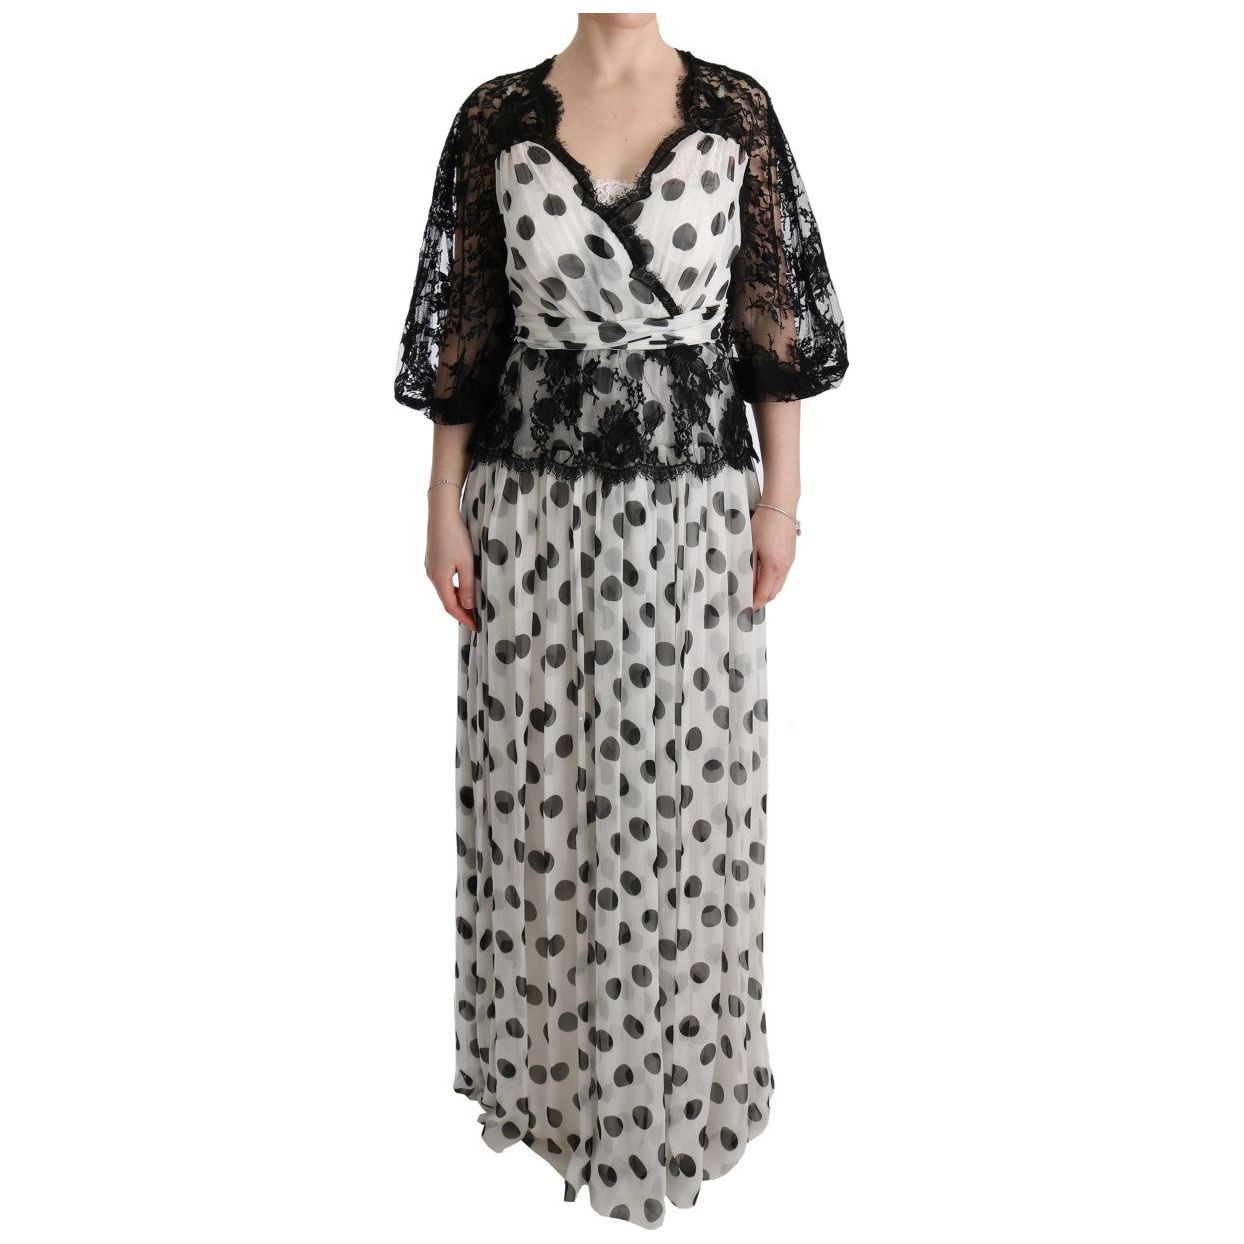 Dolce & Gabbana Elegant Polka Dotted Full Length Gown black-white-polka-dotted-floral-dress 445584-black-white-polka-dotted-floral-dress.jpg